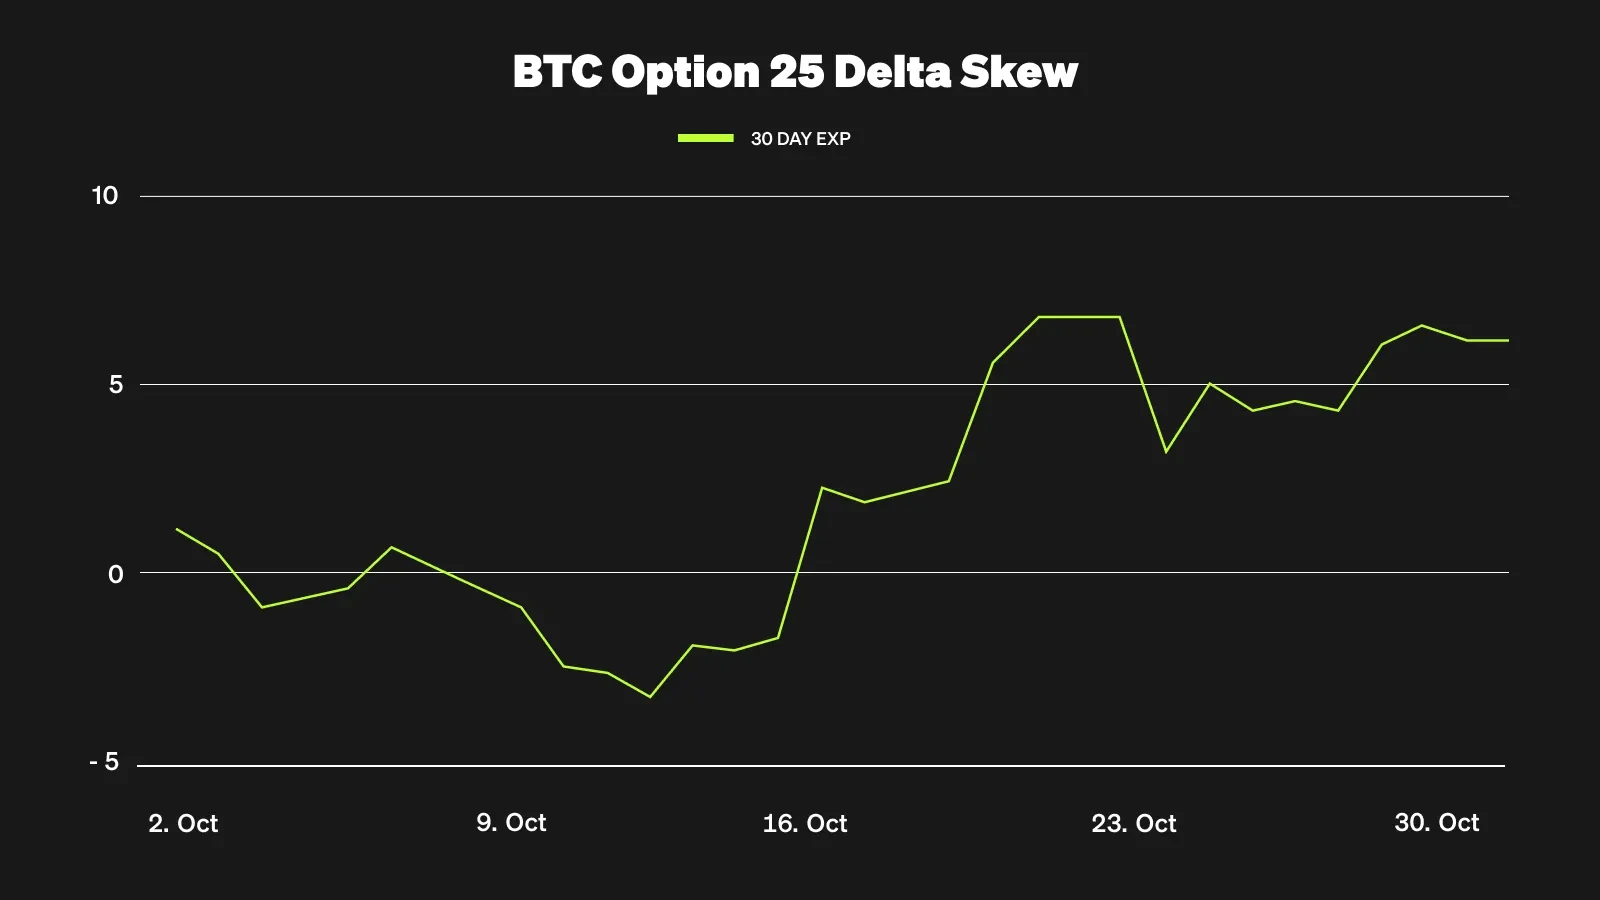 BTC Option 25 Delta Skew